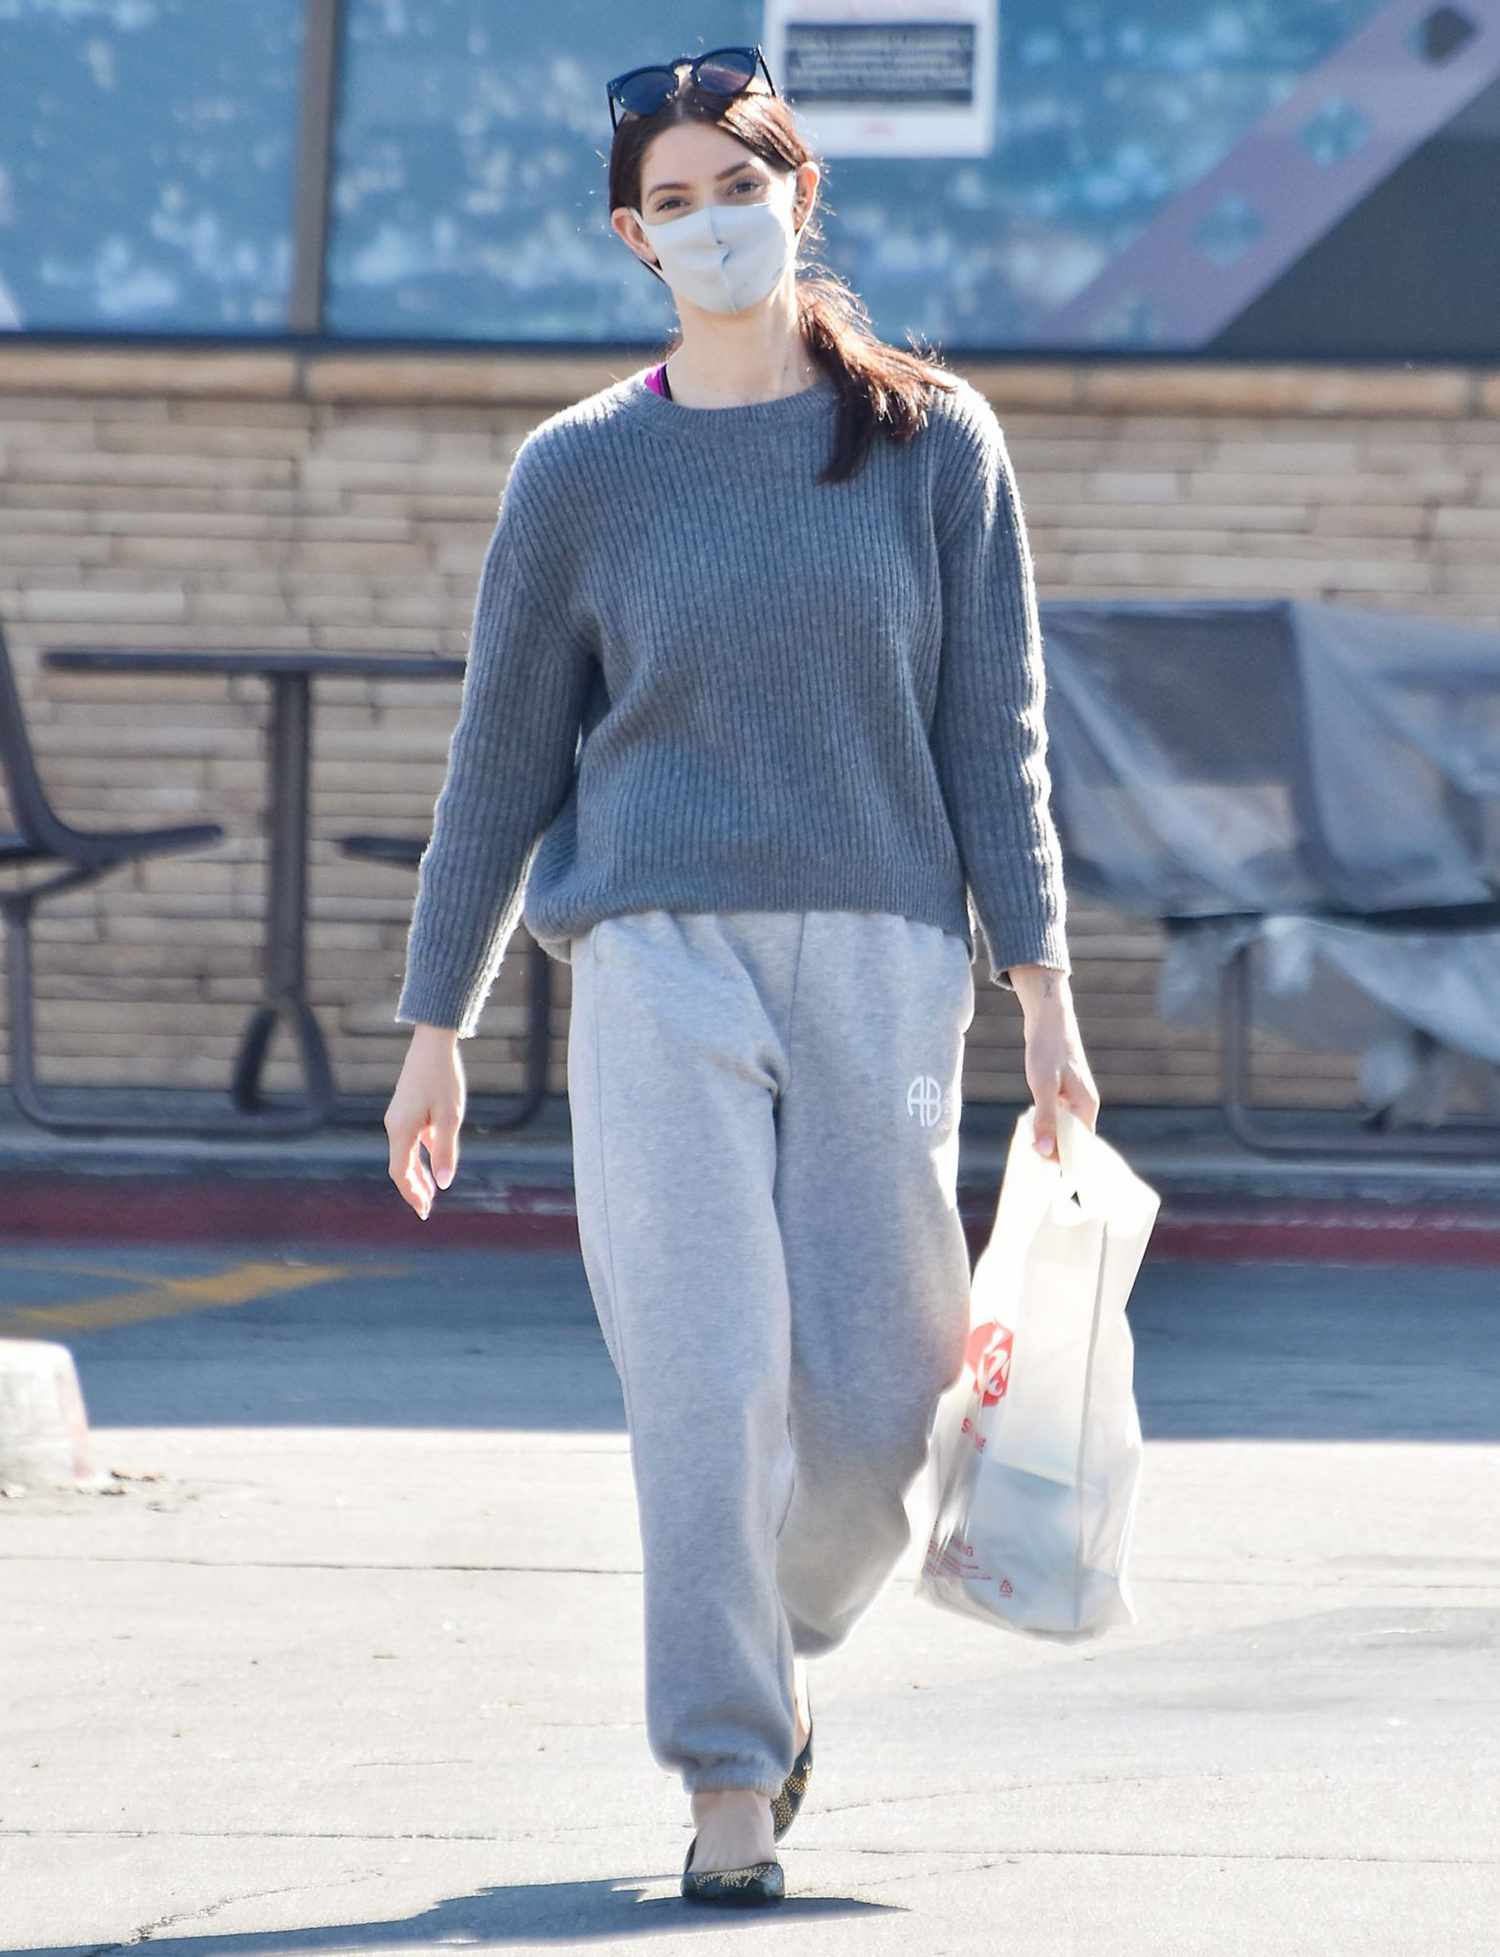 Ashley Greene is seen on February 08, 2021 in Los Angeles, California